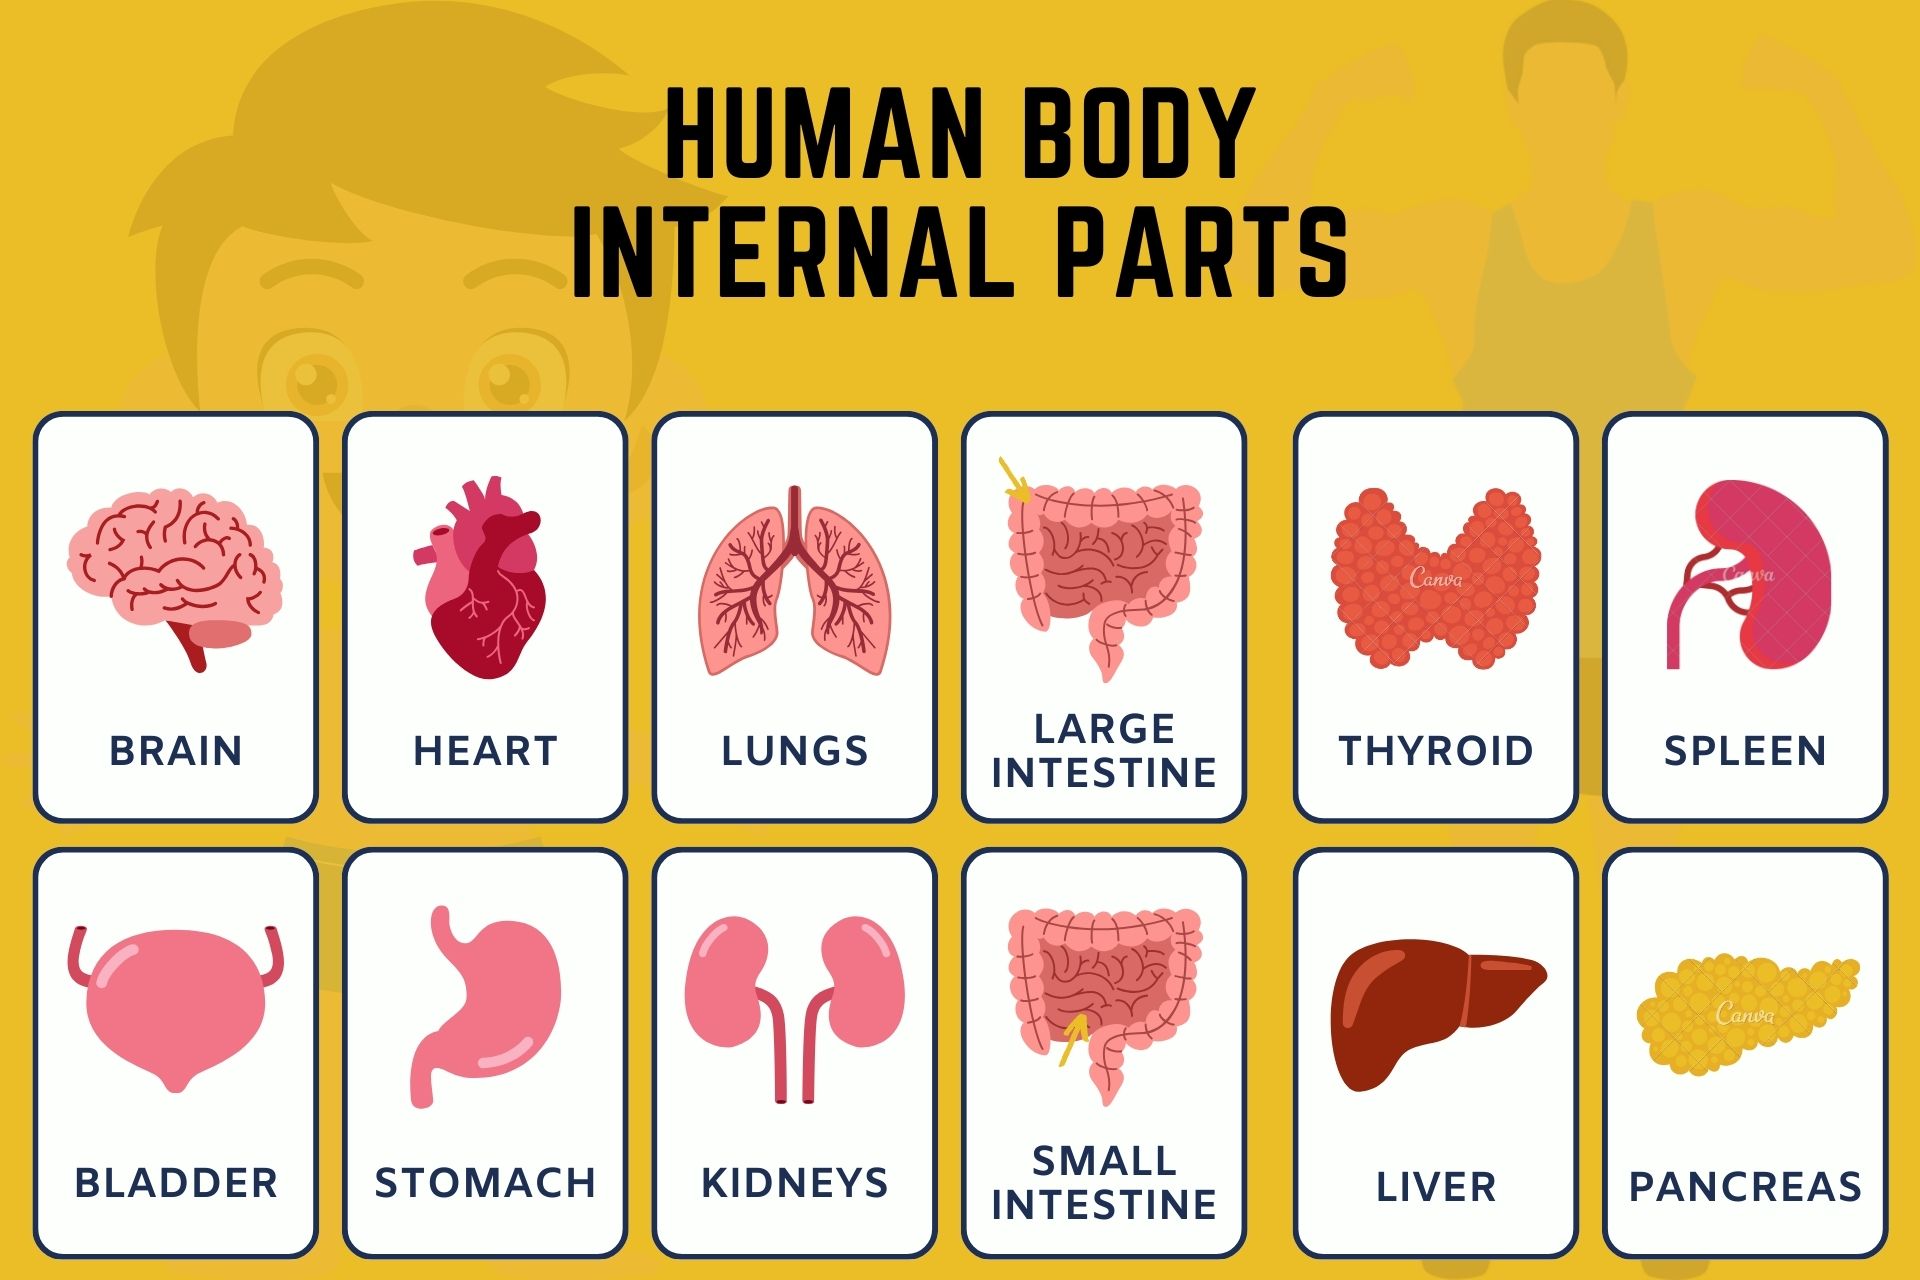 Human body internal parts